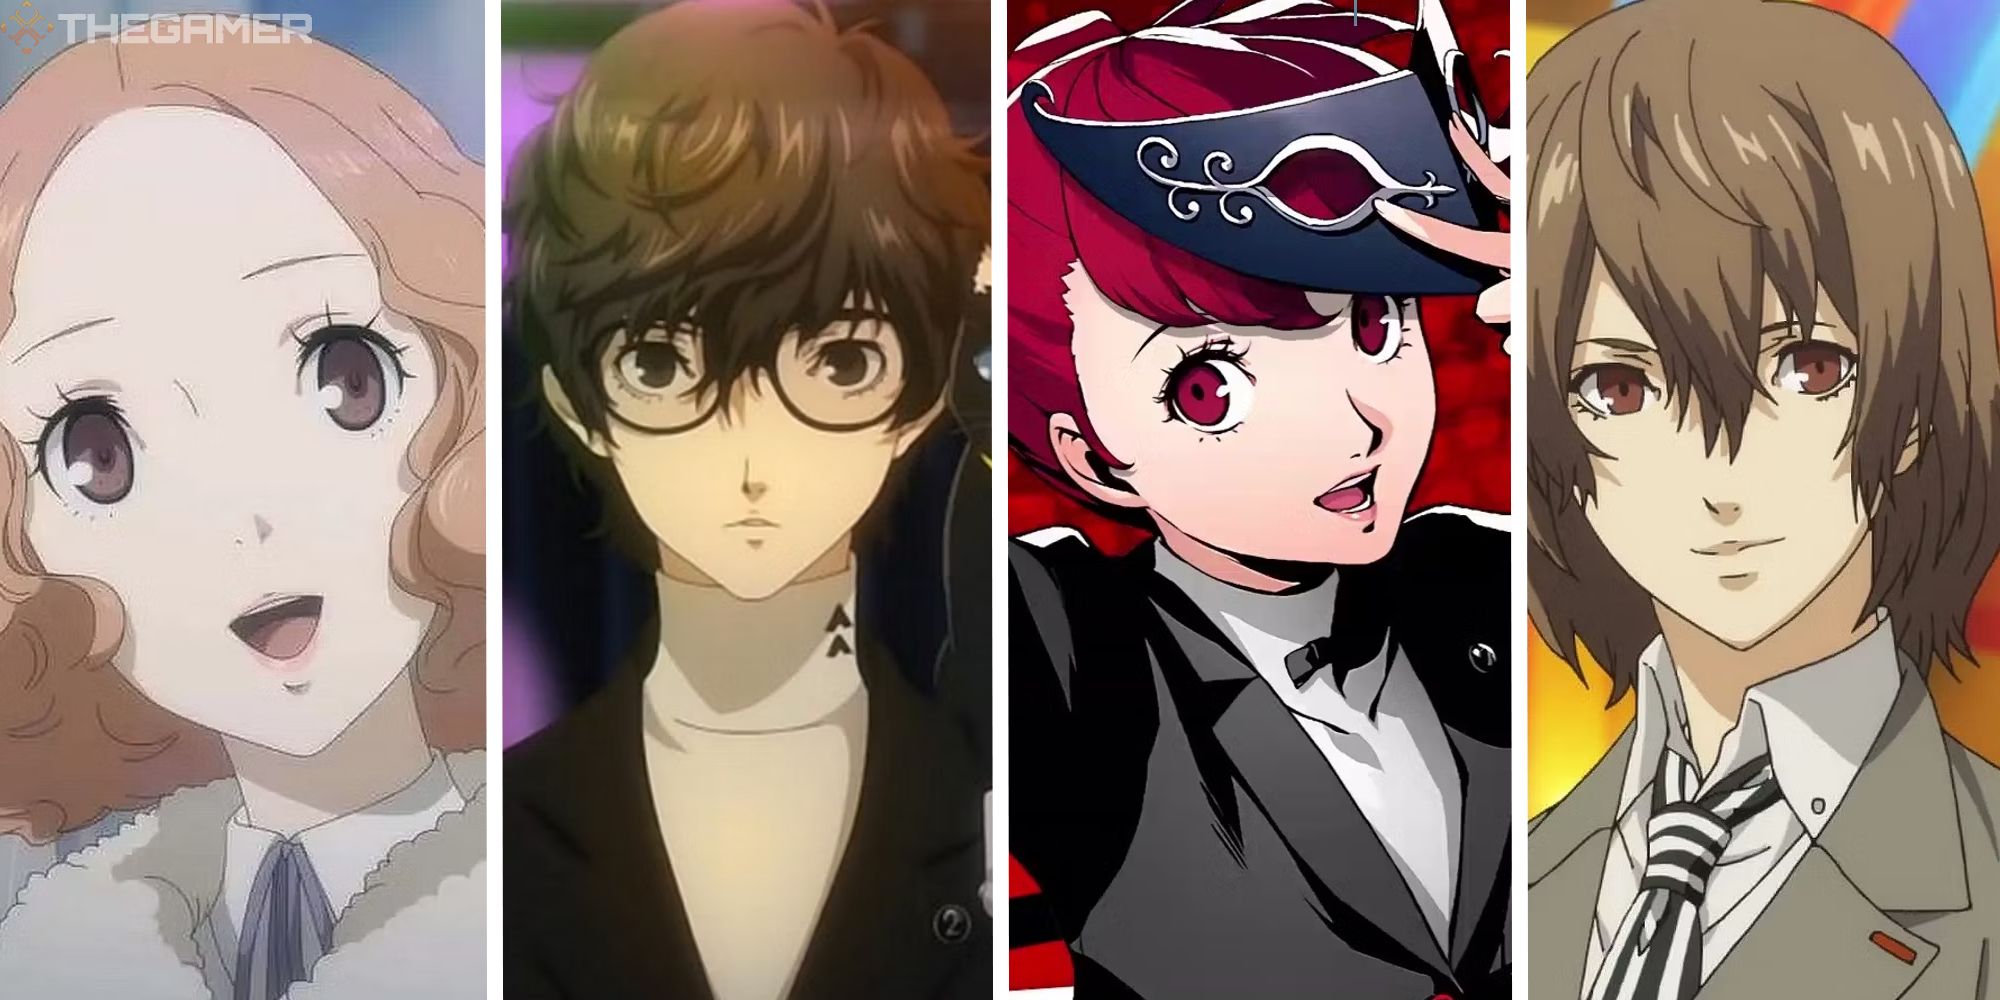 split image featuring haru, joker, kasumi, and akechi